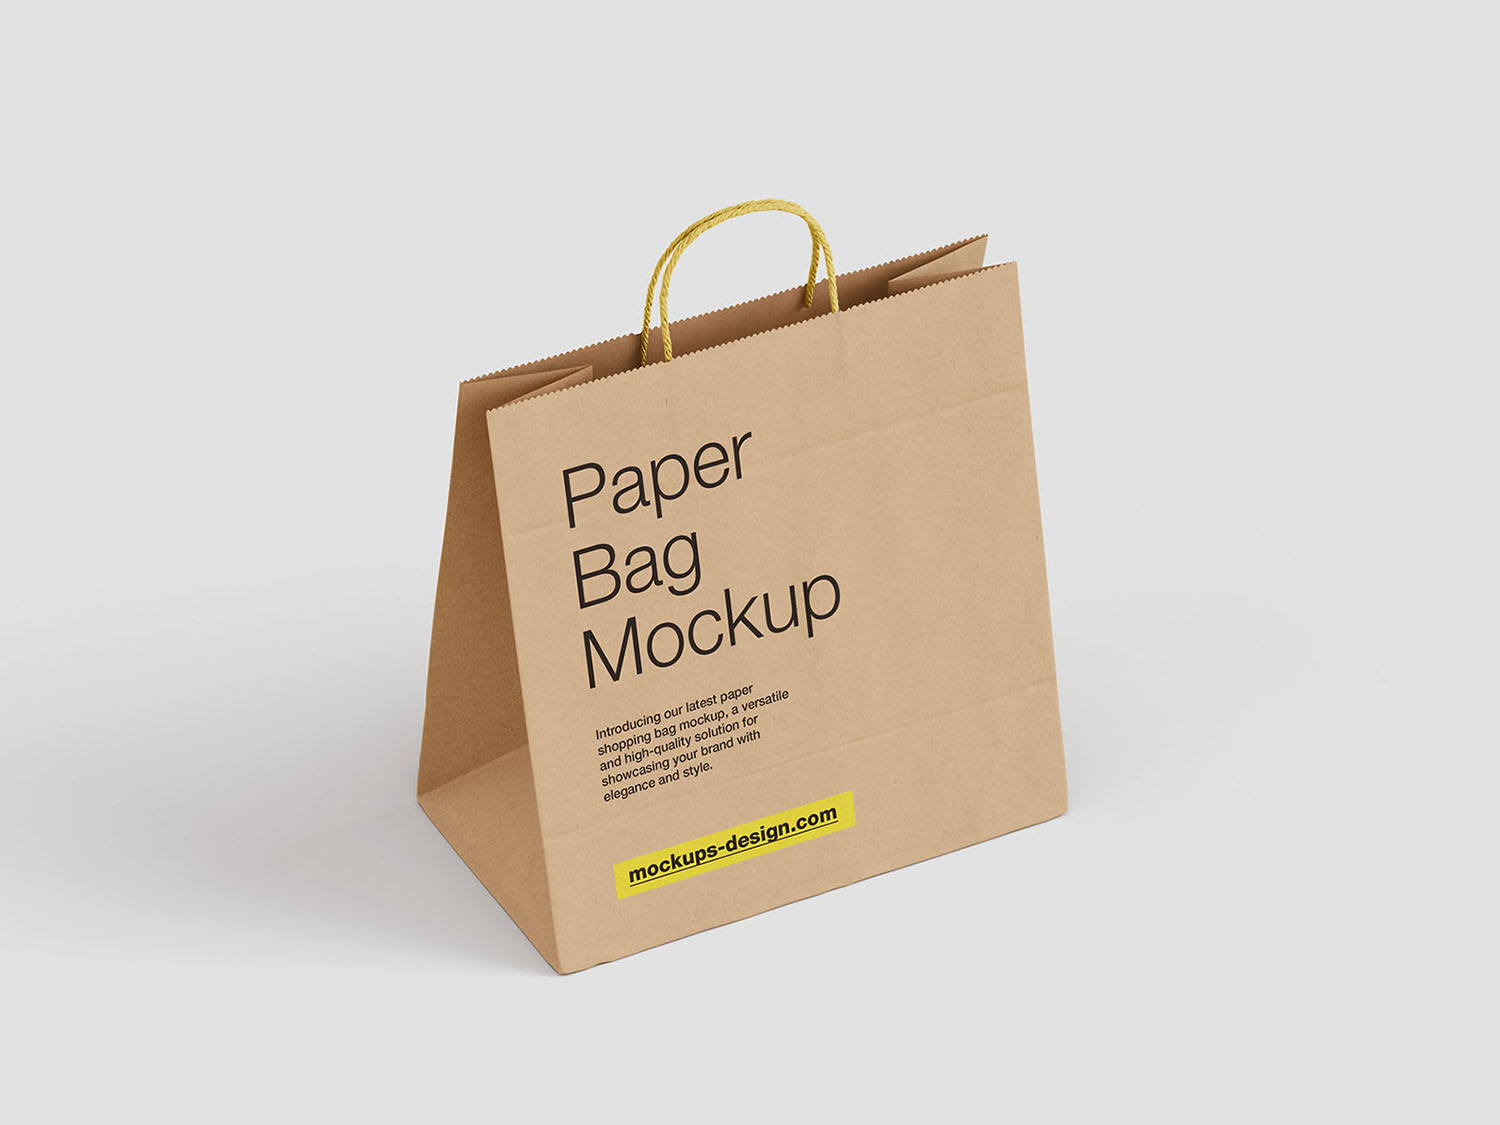 Paper Shopping Bag Free Mockup